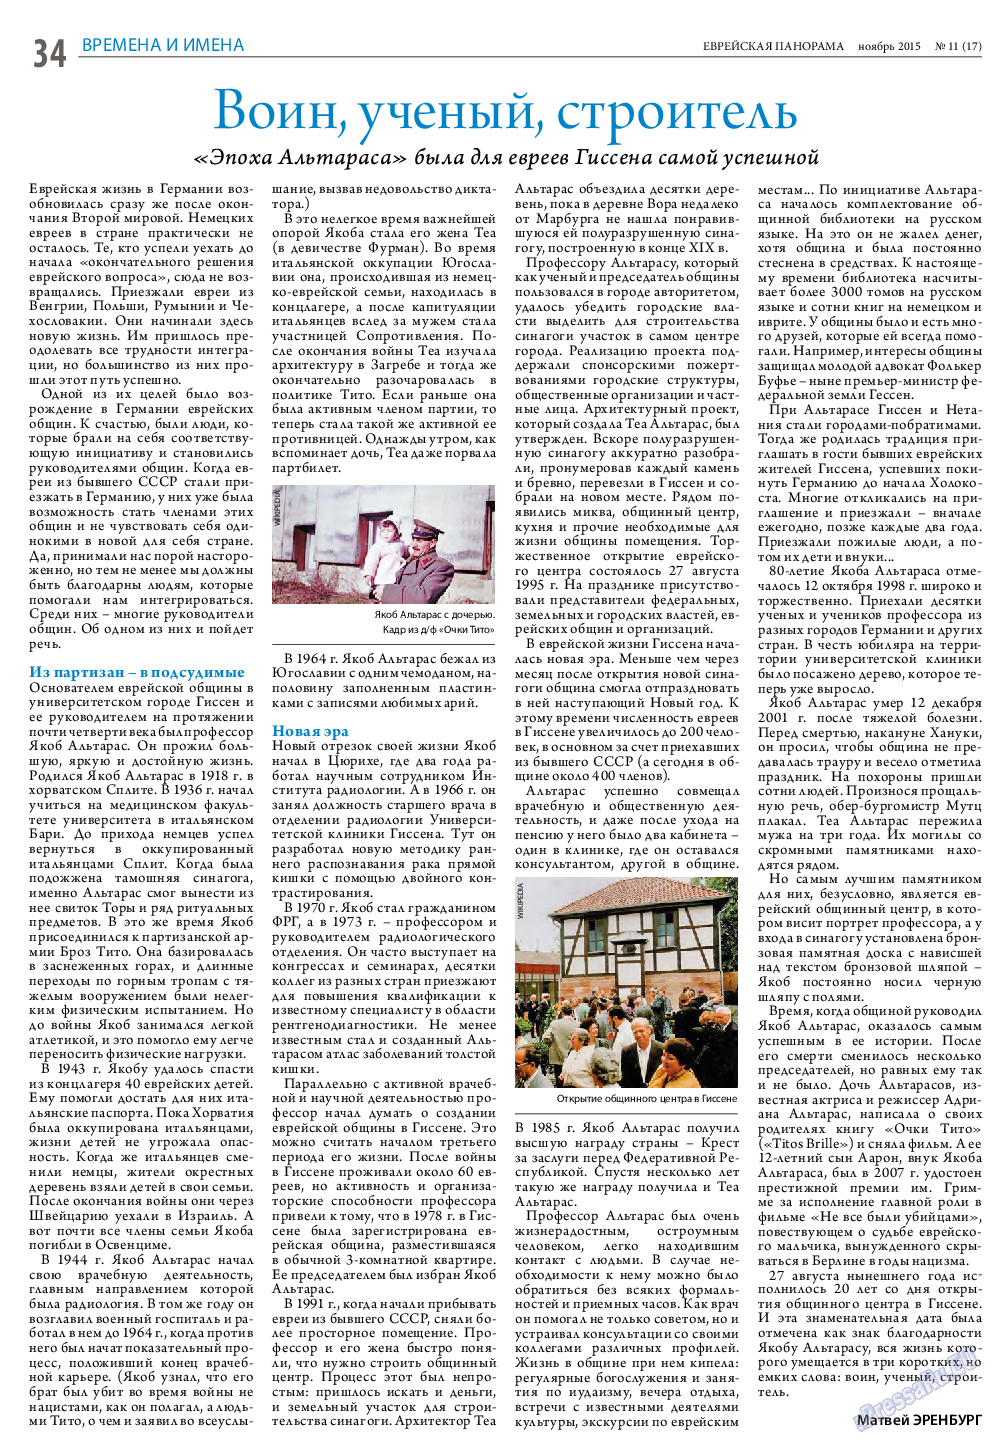 Еврейская панорама, газета. 2015 №11 стр.34